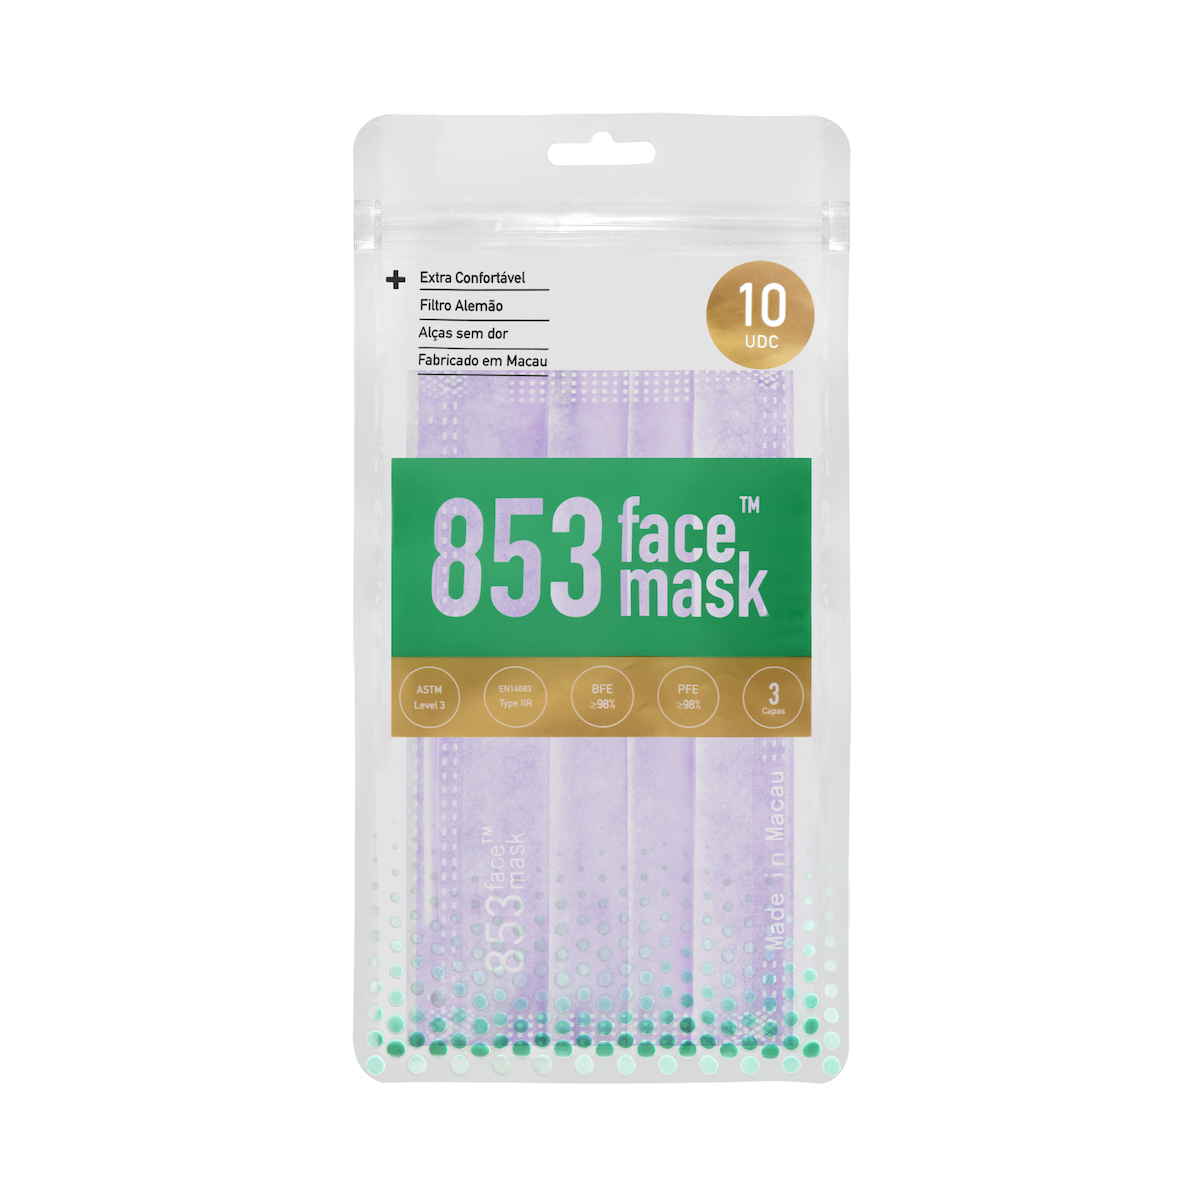 ASTM Level 3 口罩（柔紫色）非獨立包裝10片